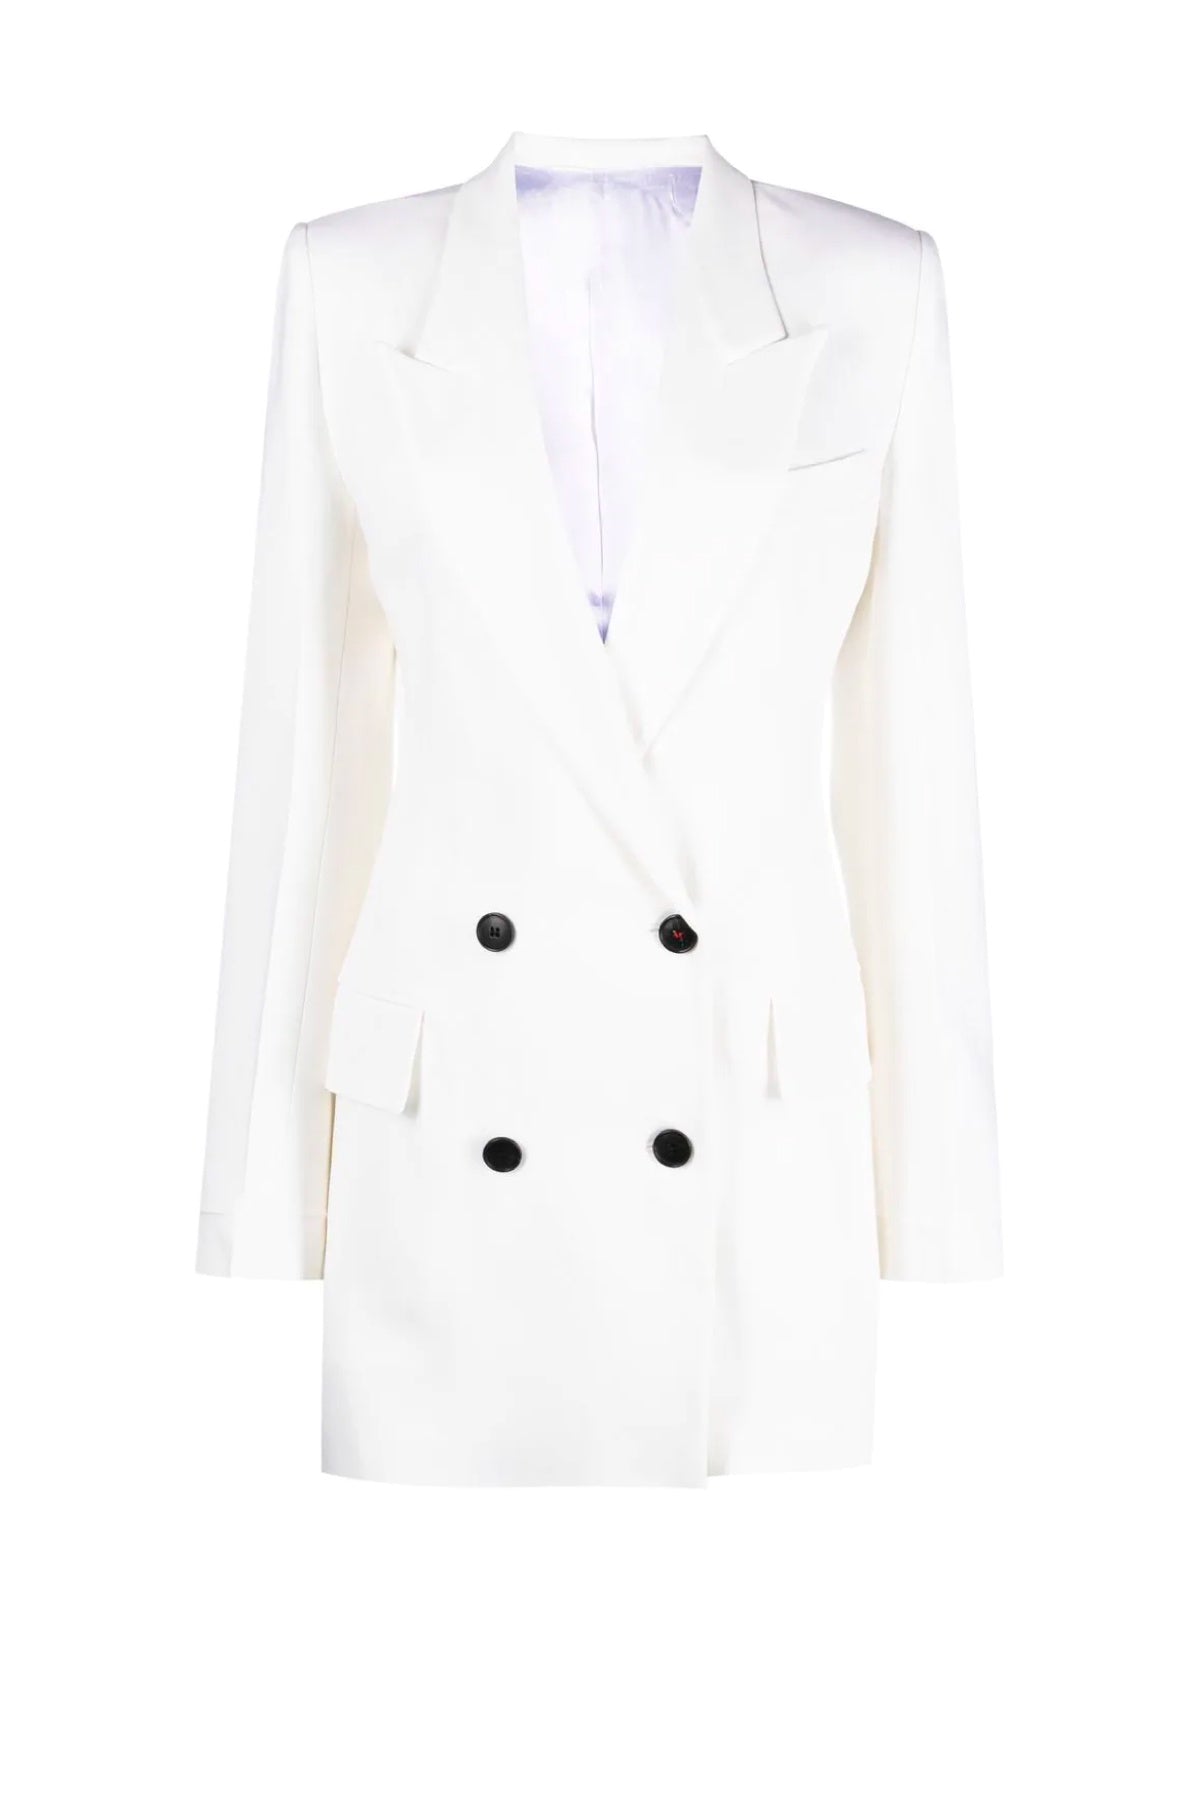 Victoria Beckham Tailored Jacket Dress - Off White